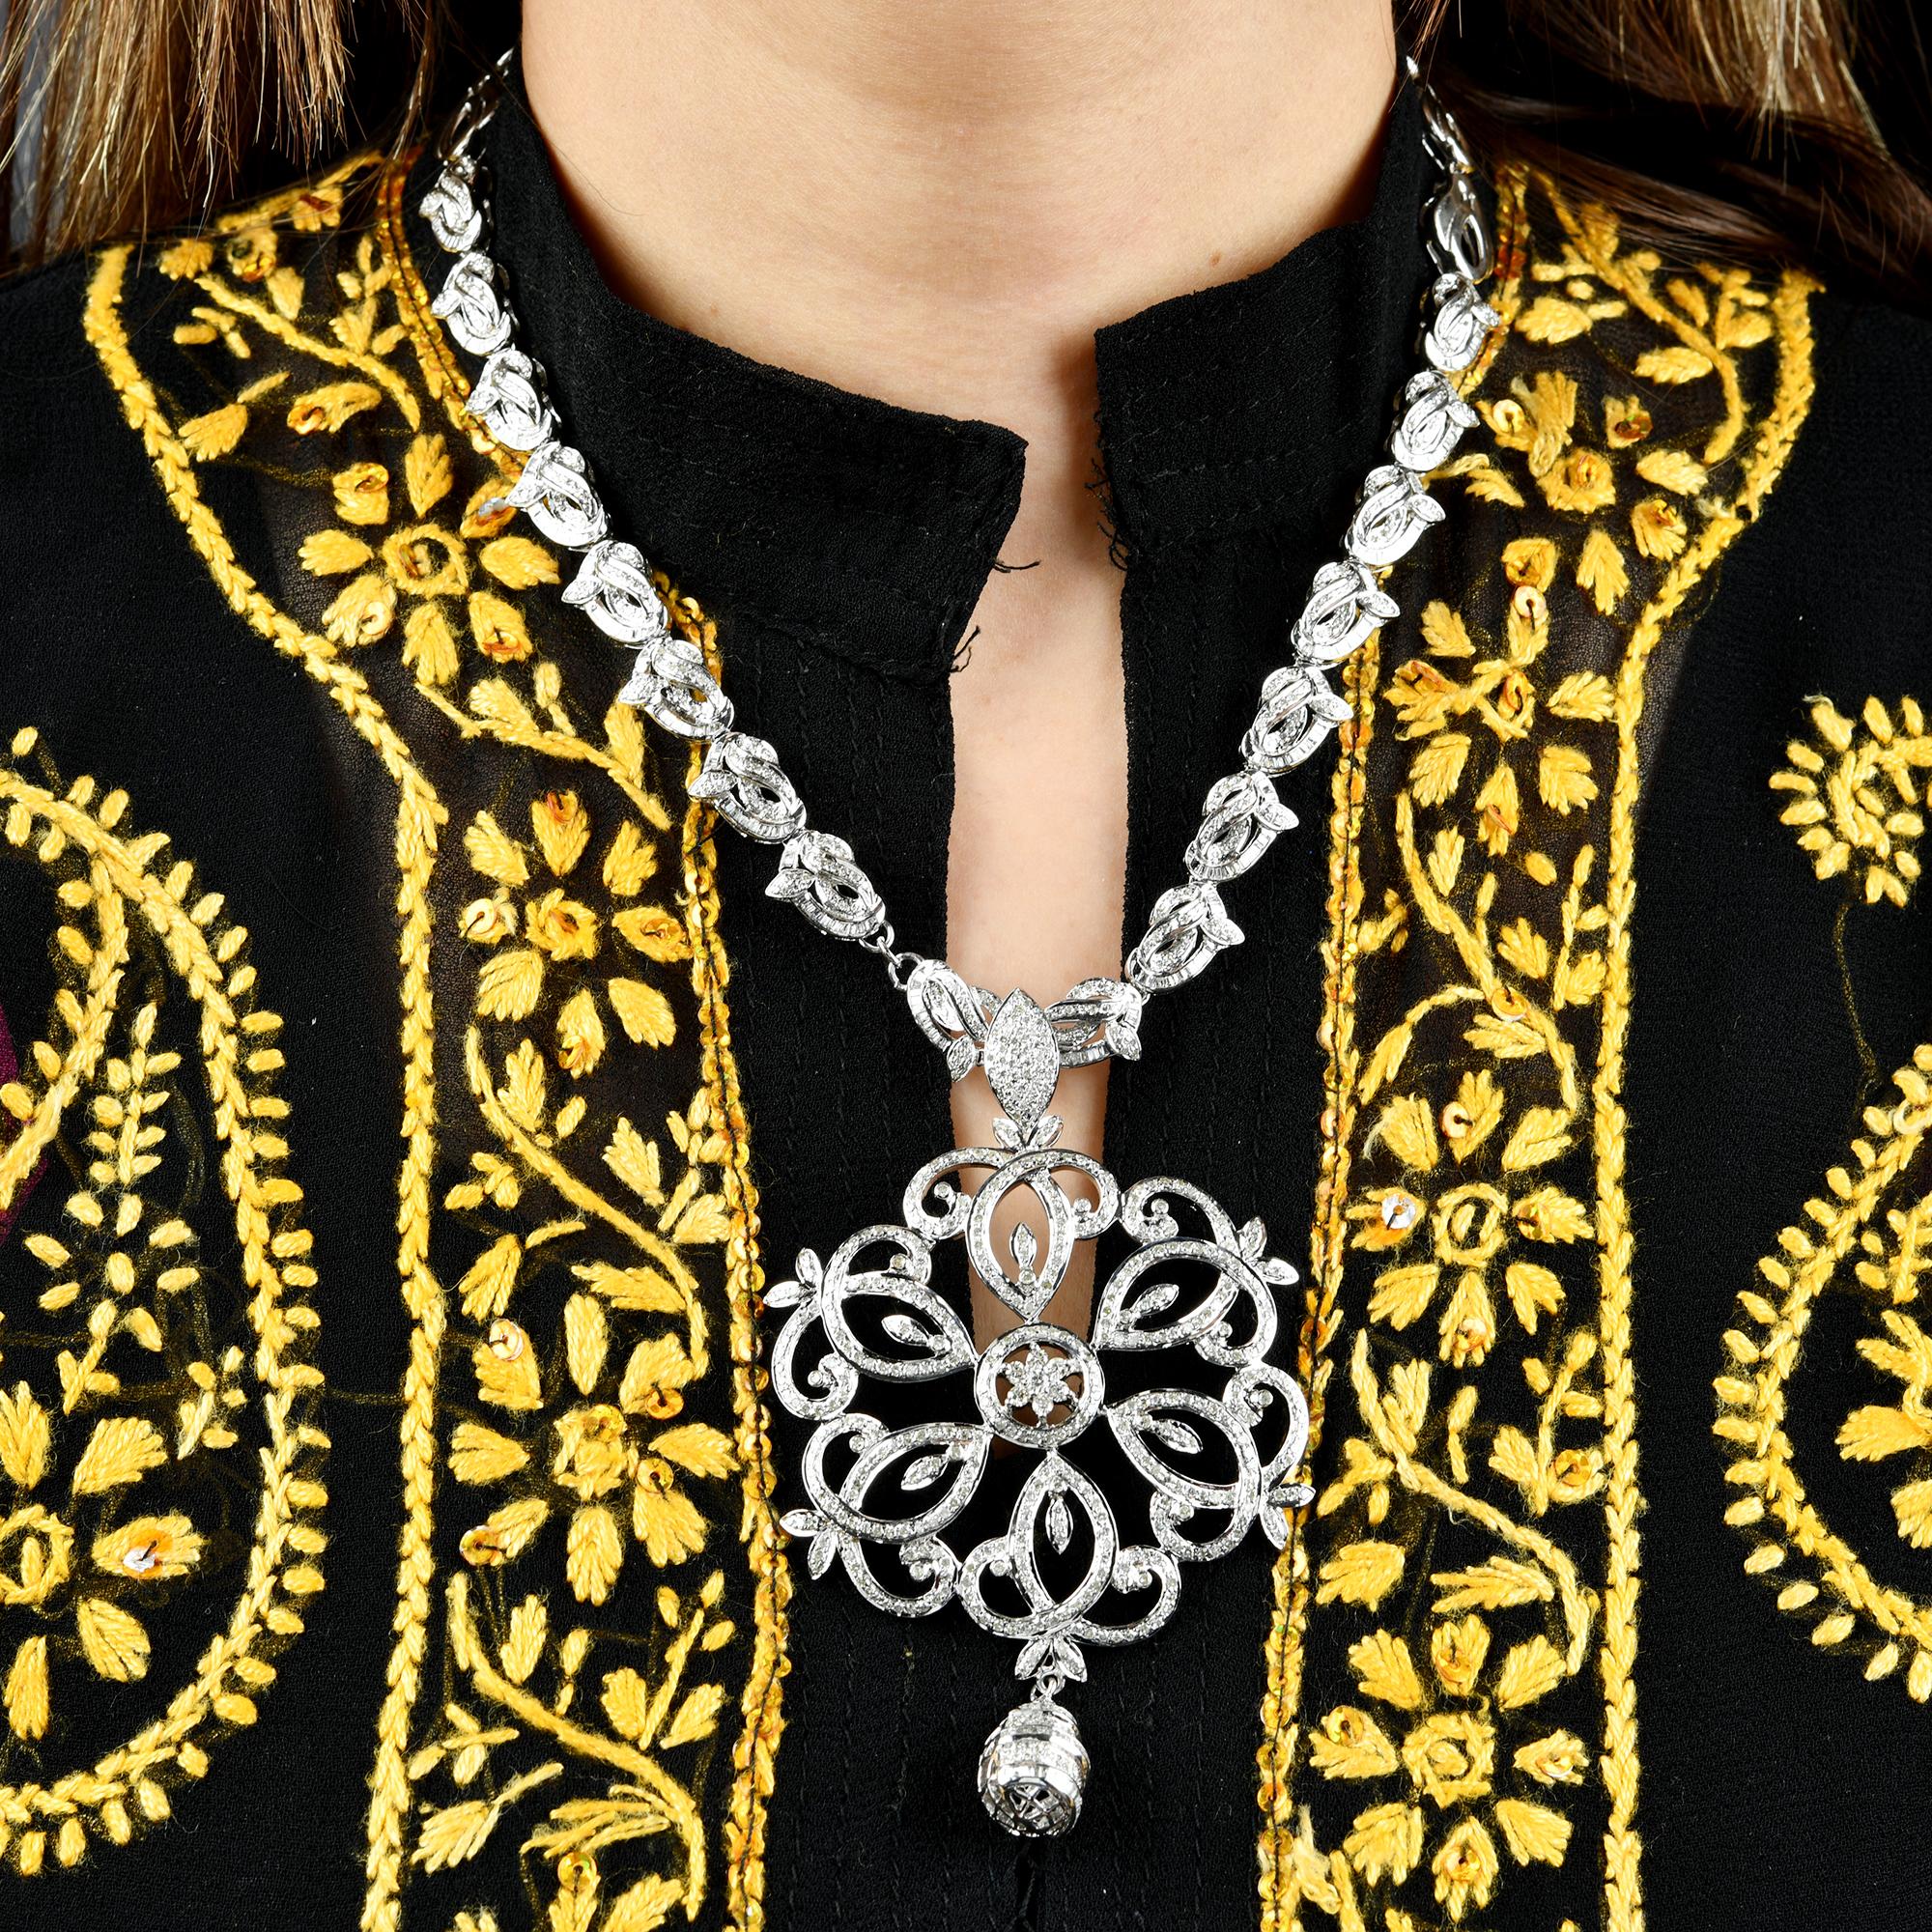 Modern Natural 12.80 Carat Diamond Pave Flower Design Pendant Necklace Silver Jewelry